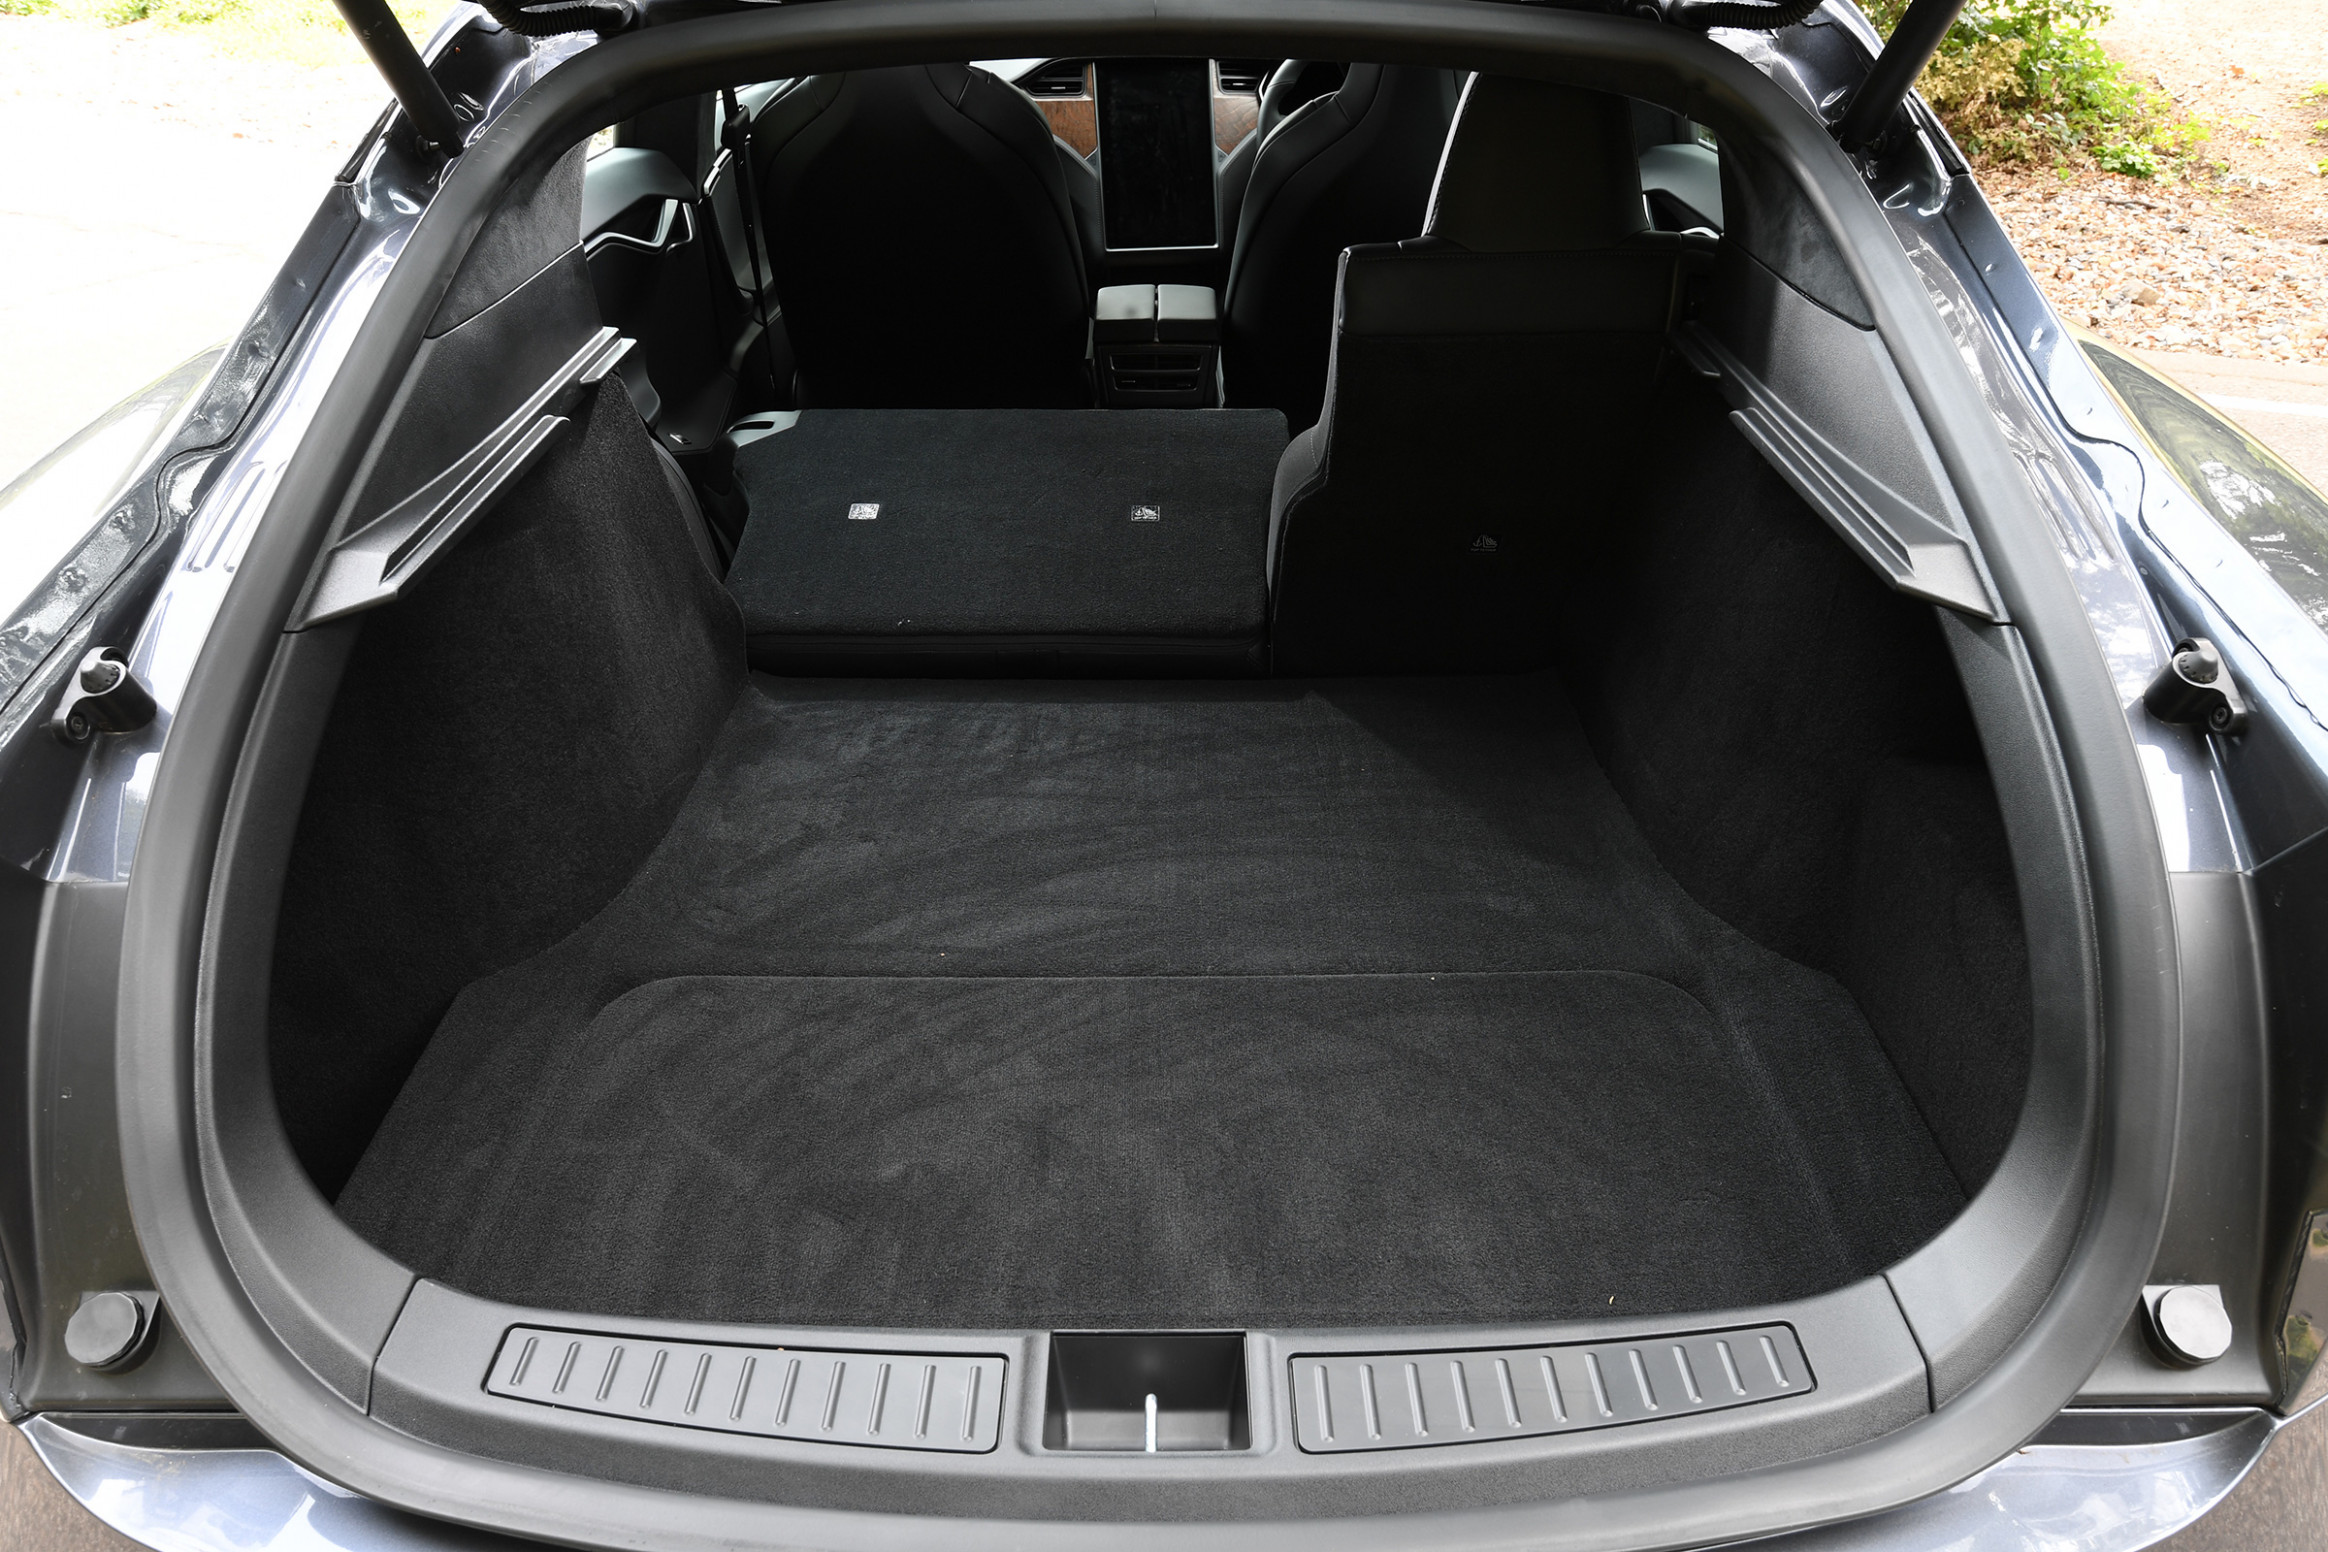 Interior model s trunk space